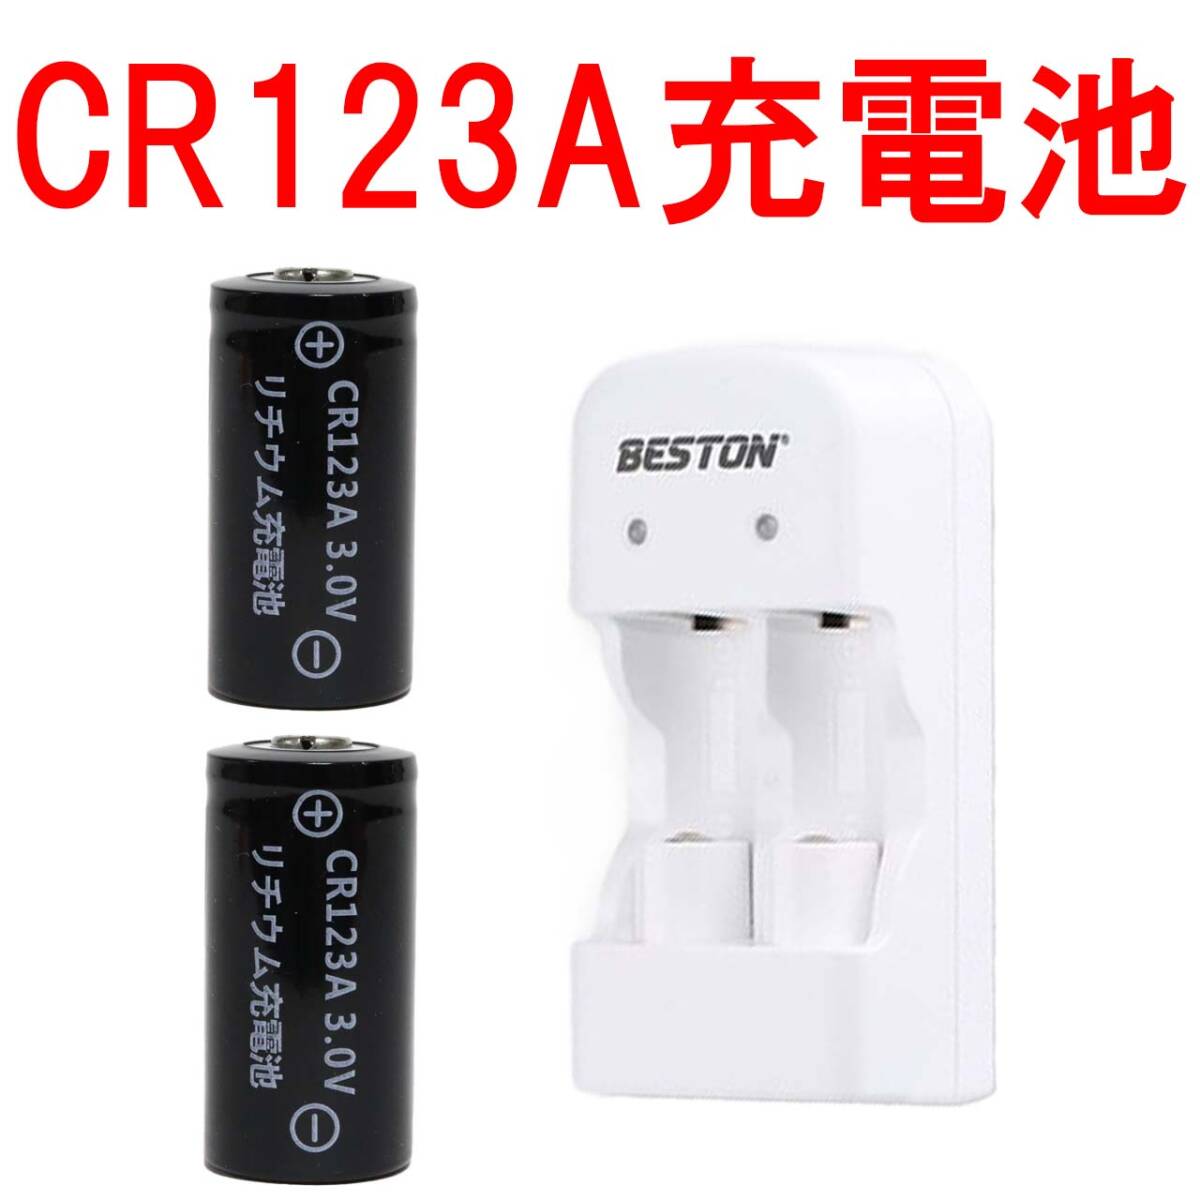 CR123A リチウムイオン充電池 switch bot スイッチボット スマートロック 鍵 スマートキー ドアロック バッテリー 充電式 CR123A+充電器 05の画像1